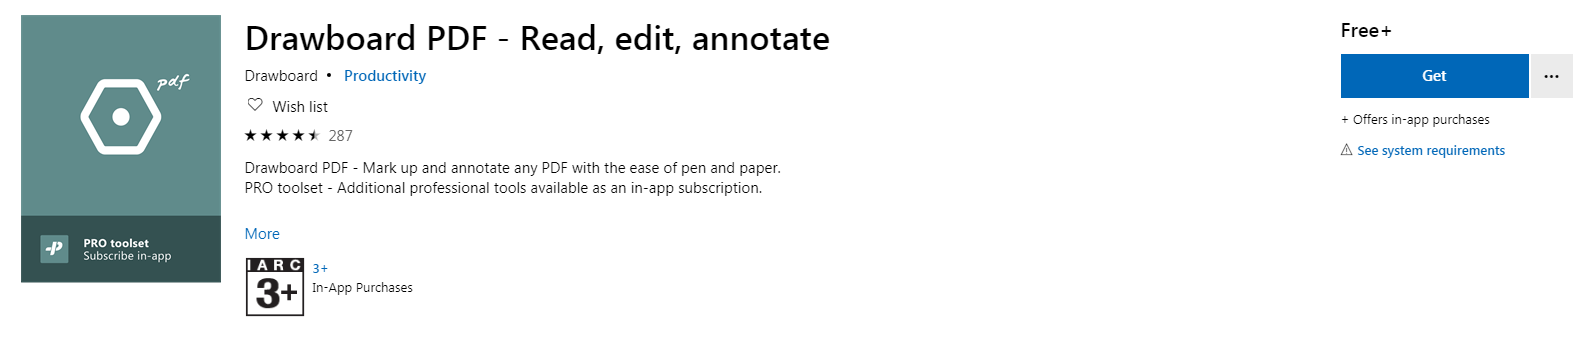 drawboard-pdf-–-read,-edit,-annotate